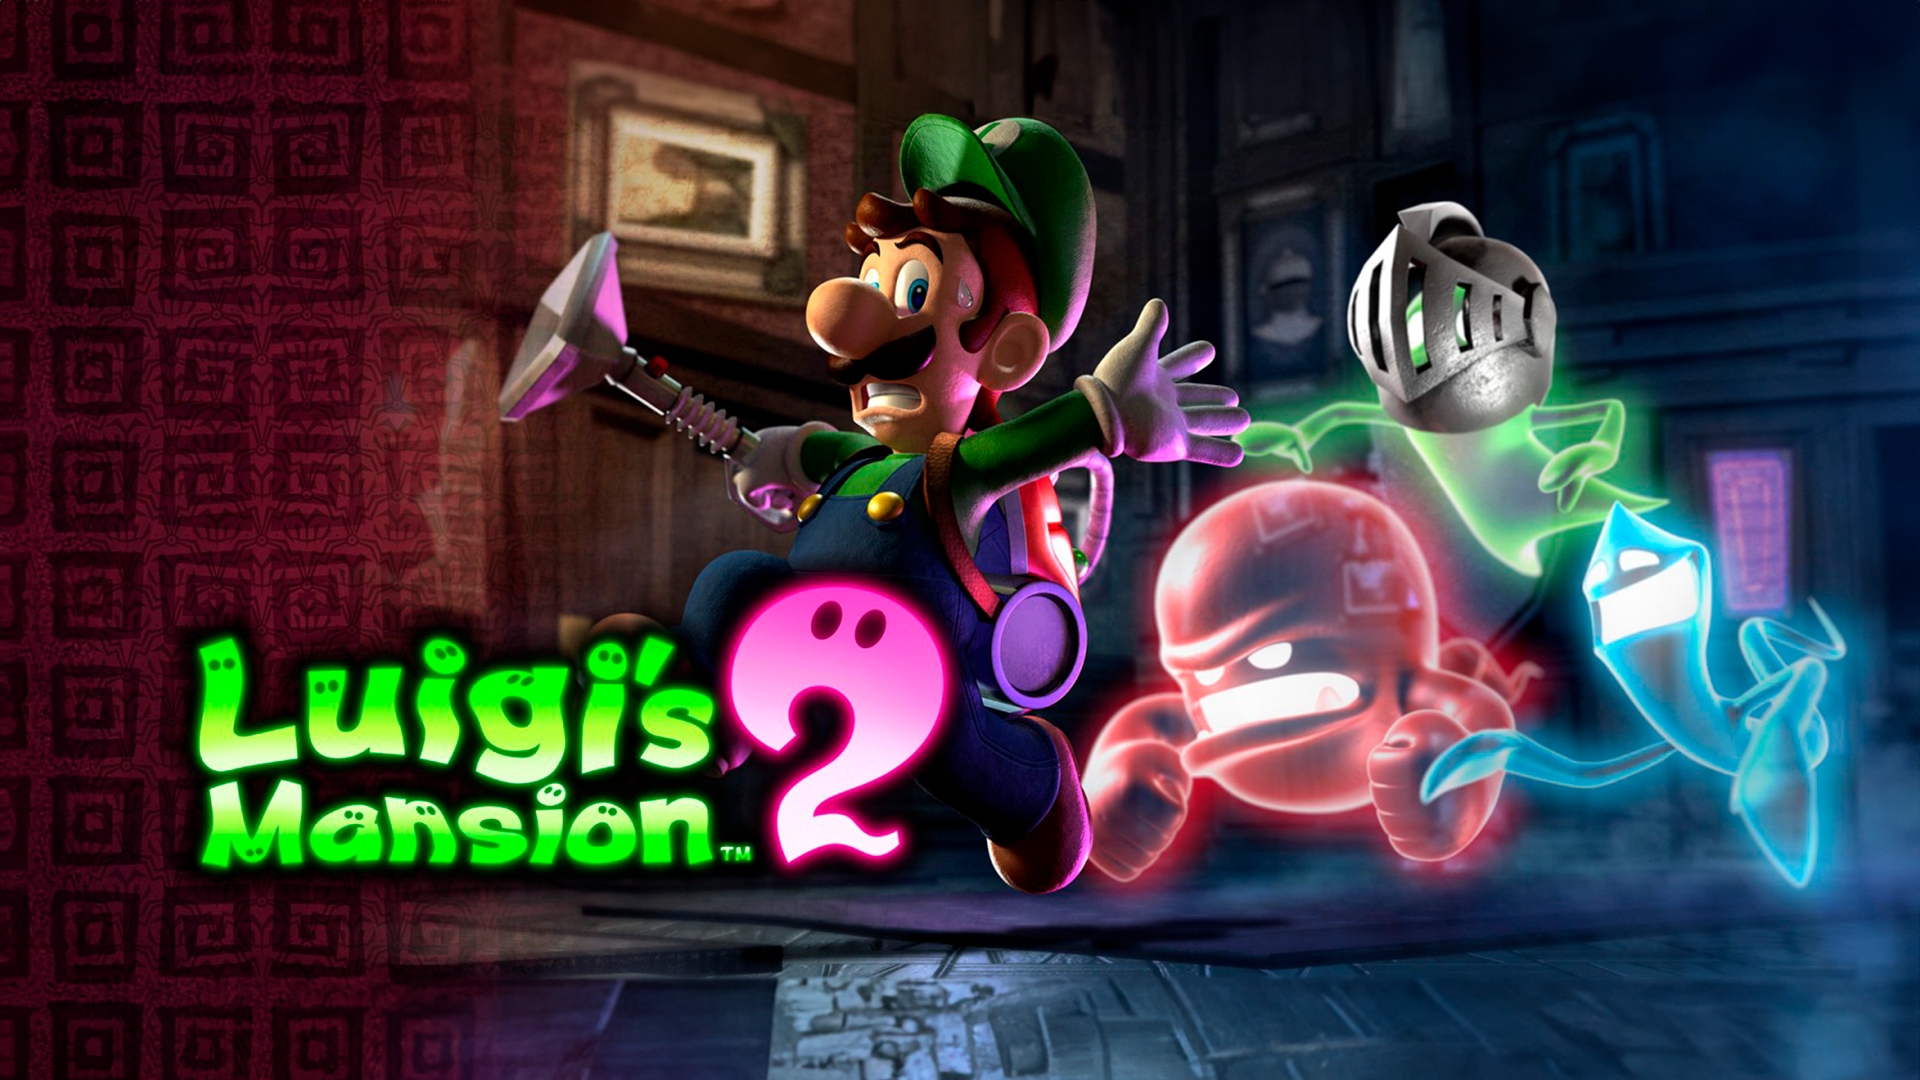 Nintendo luigi s mansion. Luigi's Mansion Nintendo 3ds. Luigi's Mansion [3ds]. Luigi s Mansion 3ds. Luigi's Mansion 2 (3ds).